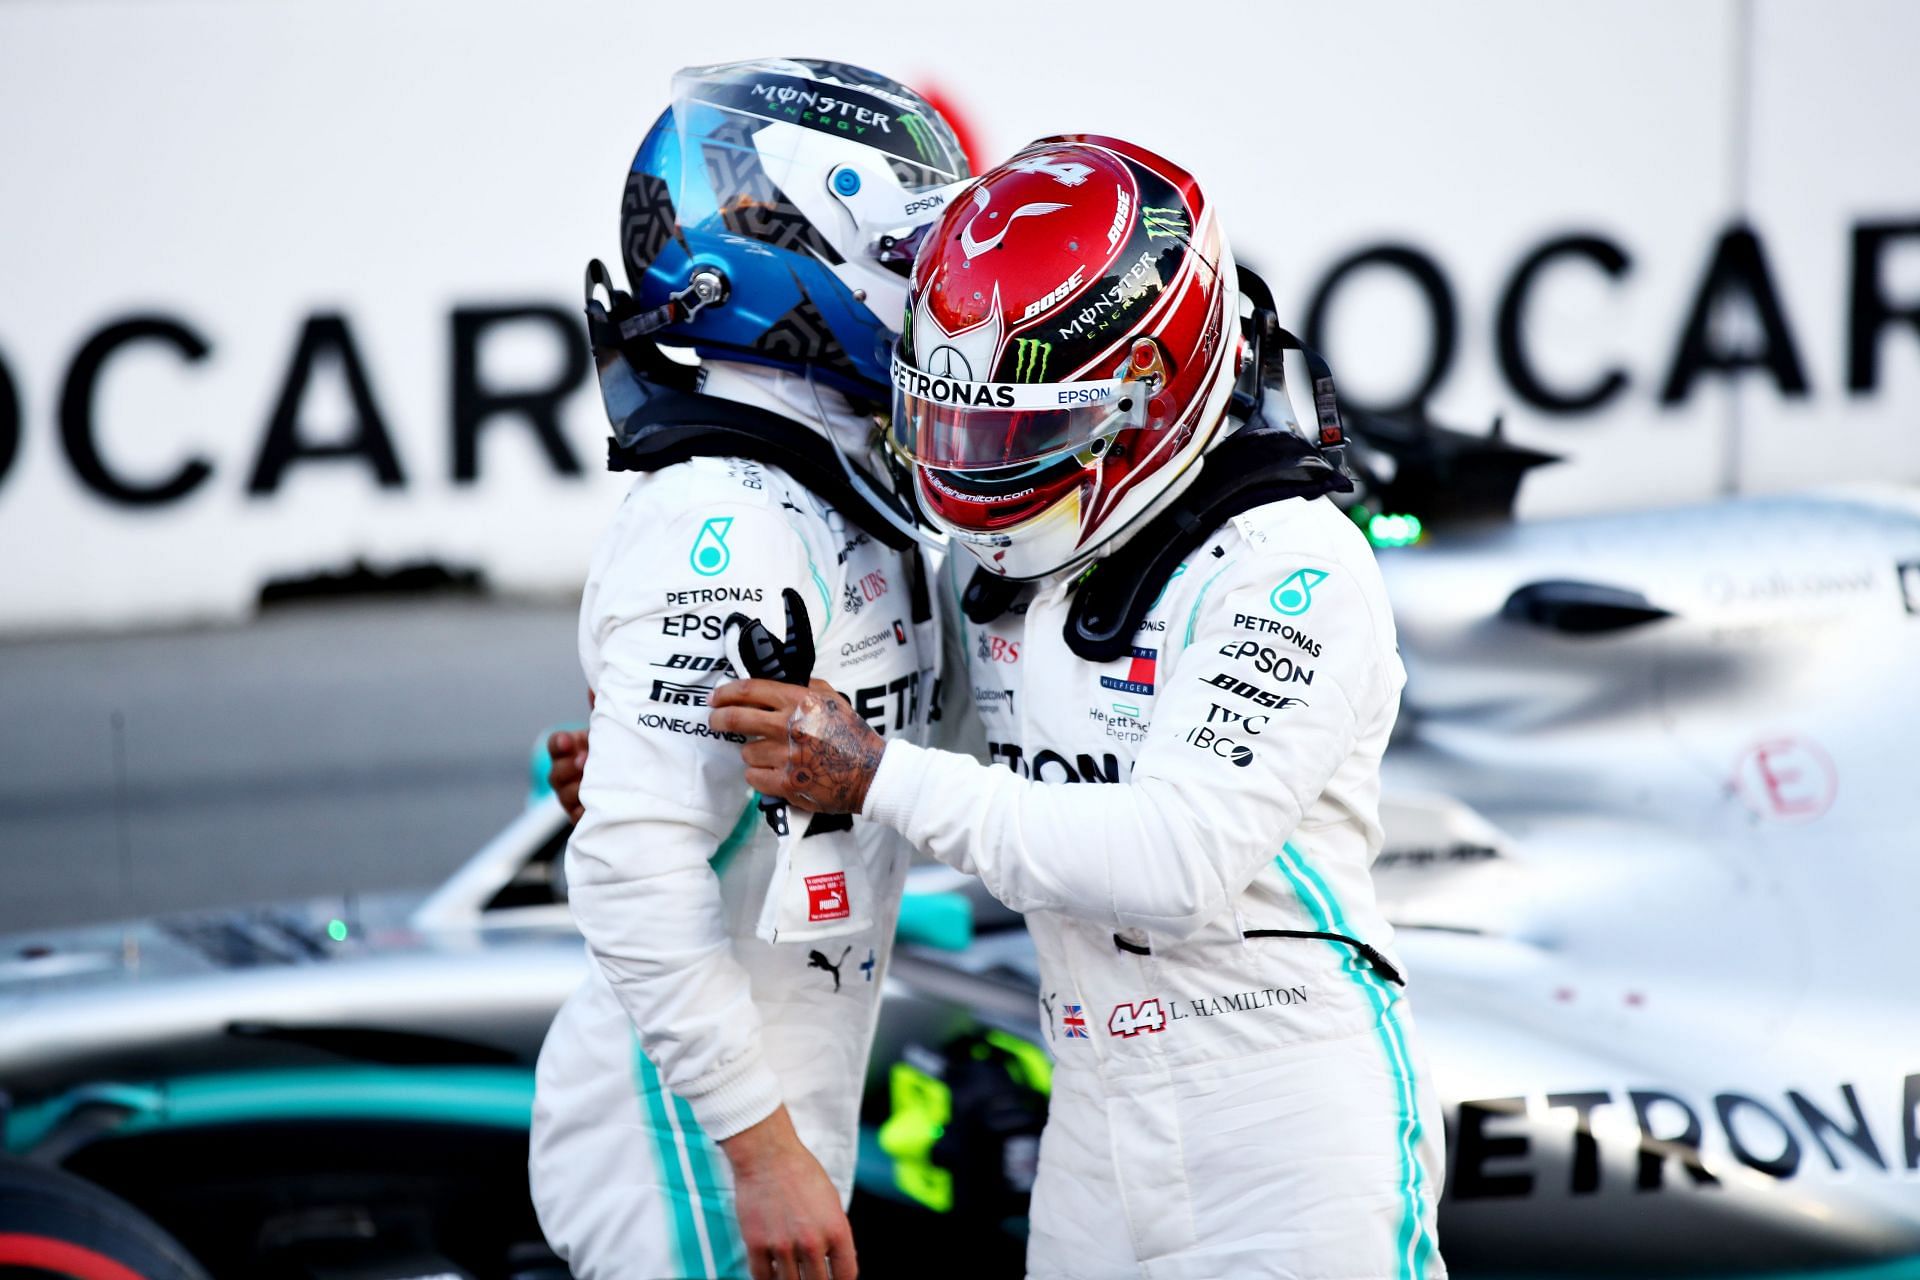 F1 Grand Prix of Azerbaijan - The two Mercedes drivers celebrate